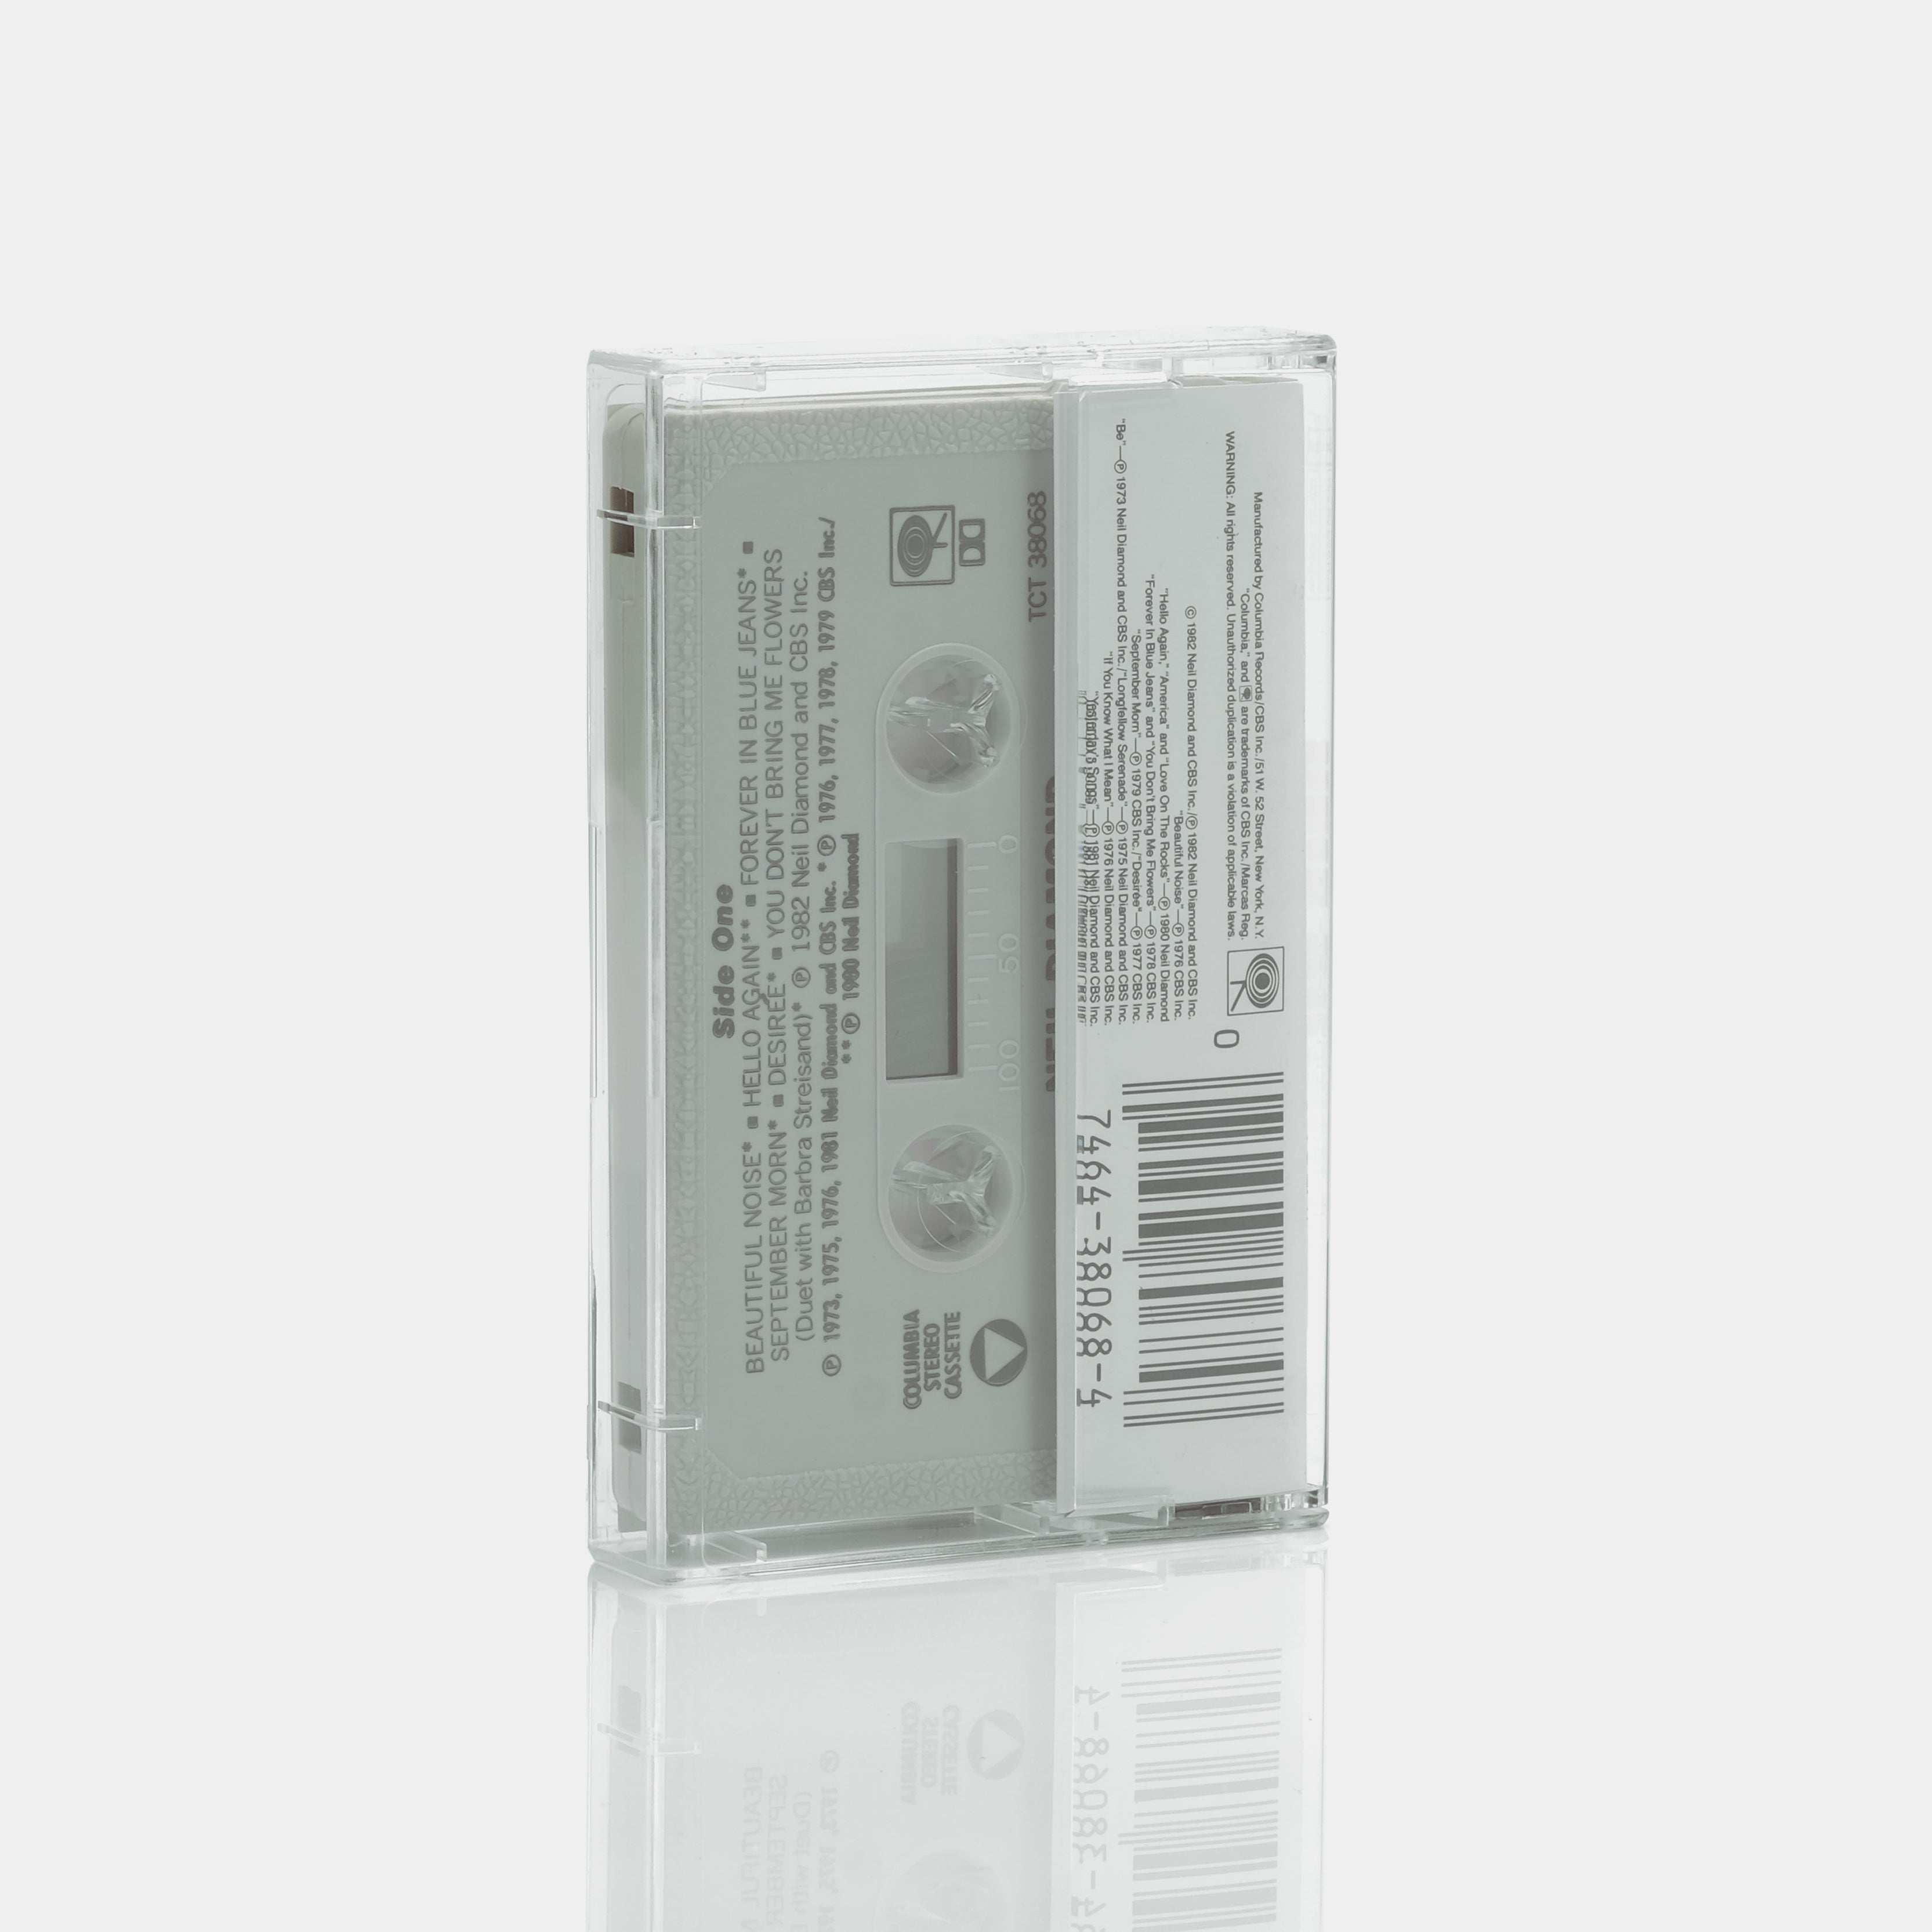 Neil Diamond - 12 Greatest Hits, Volume II Cassette Tape